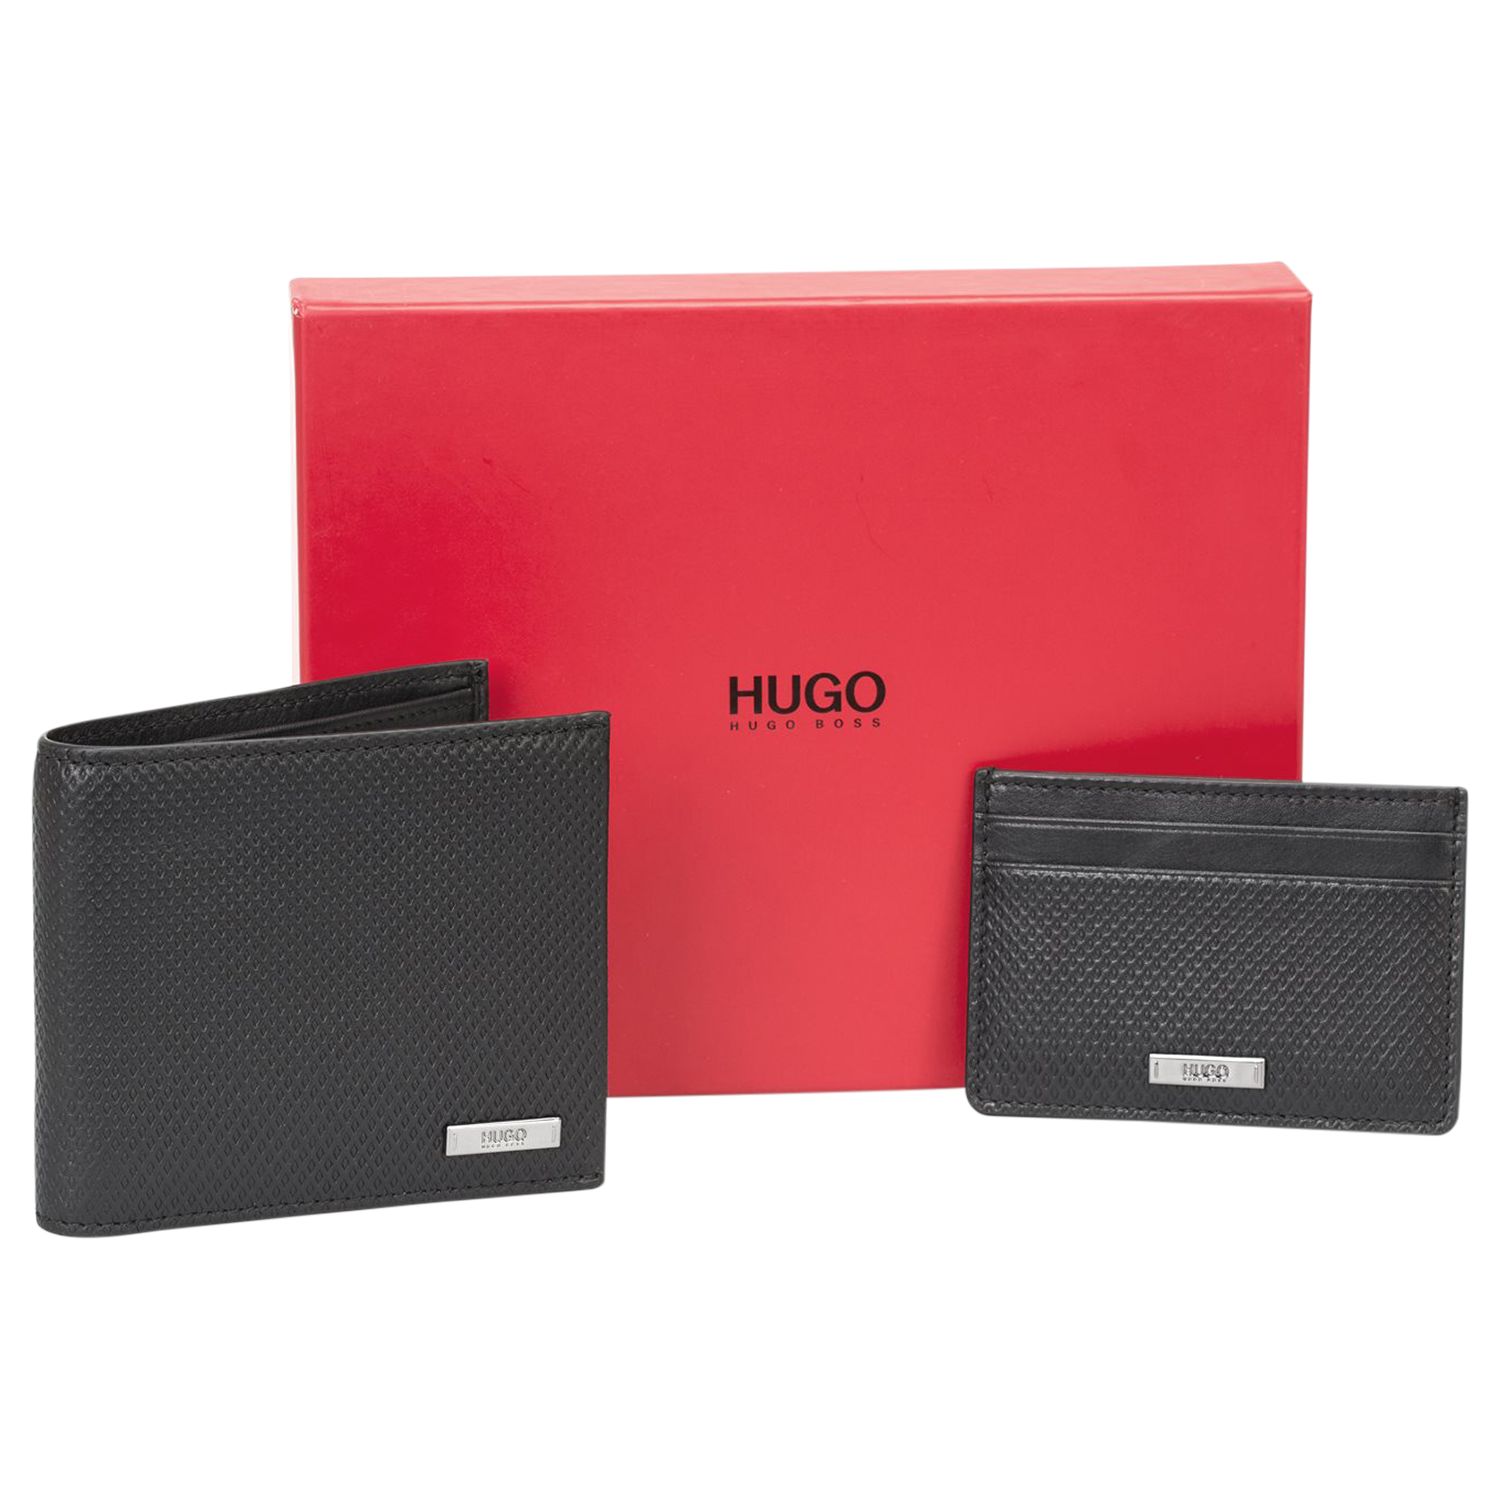 hugo boss wallet gift set